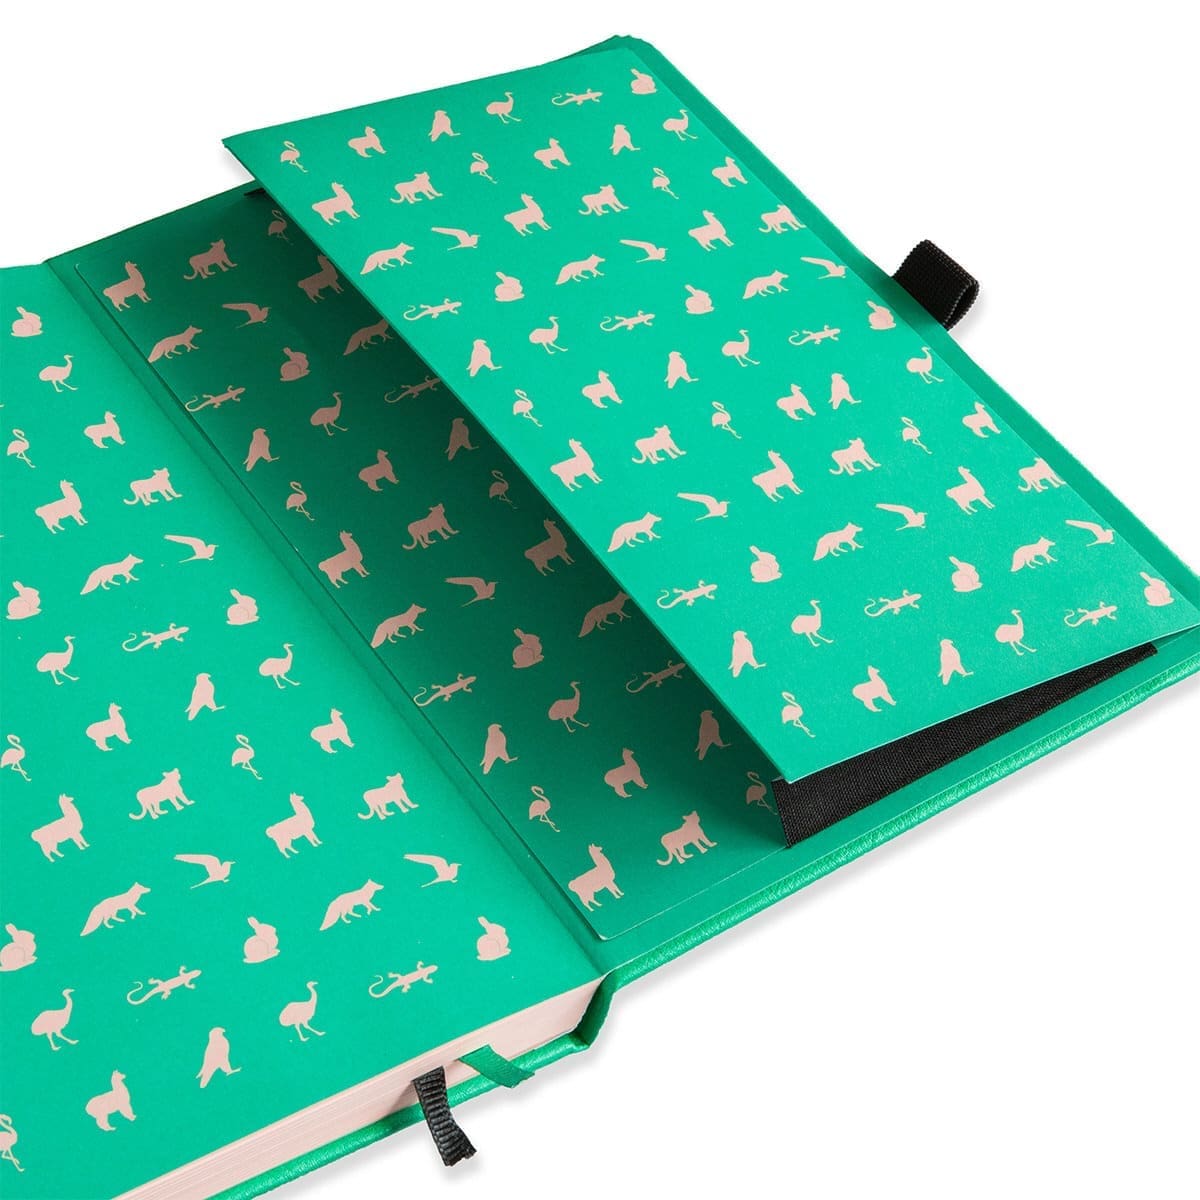 Dotted notebook Earth Collection - Emerald Eduardo Avaroa - Dingbats* - Tidformera